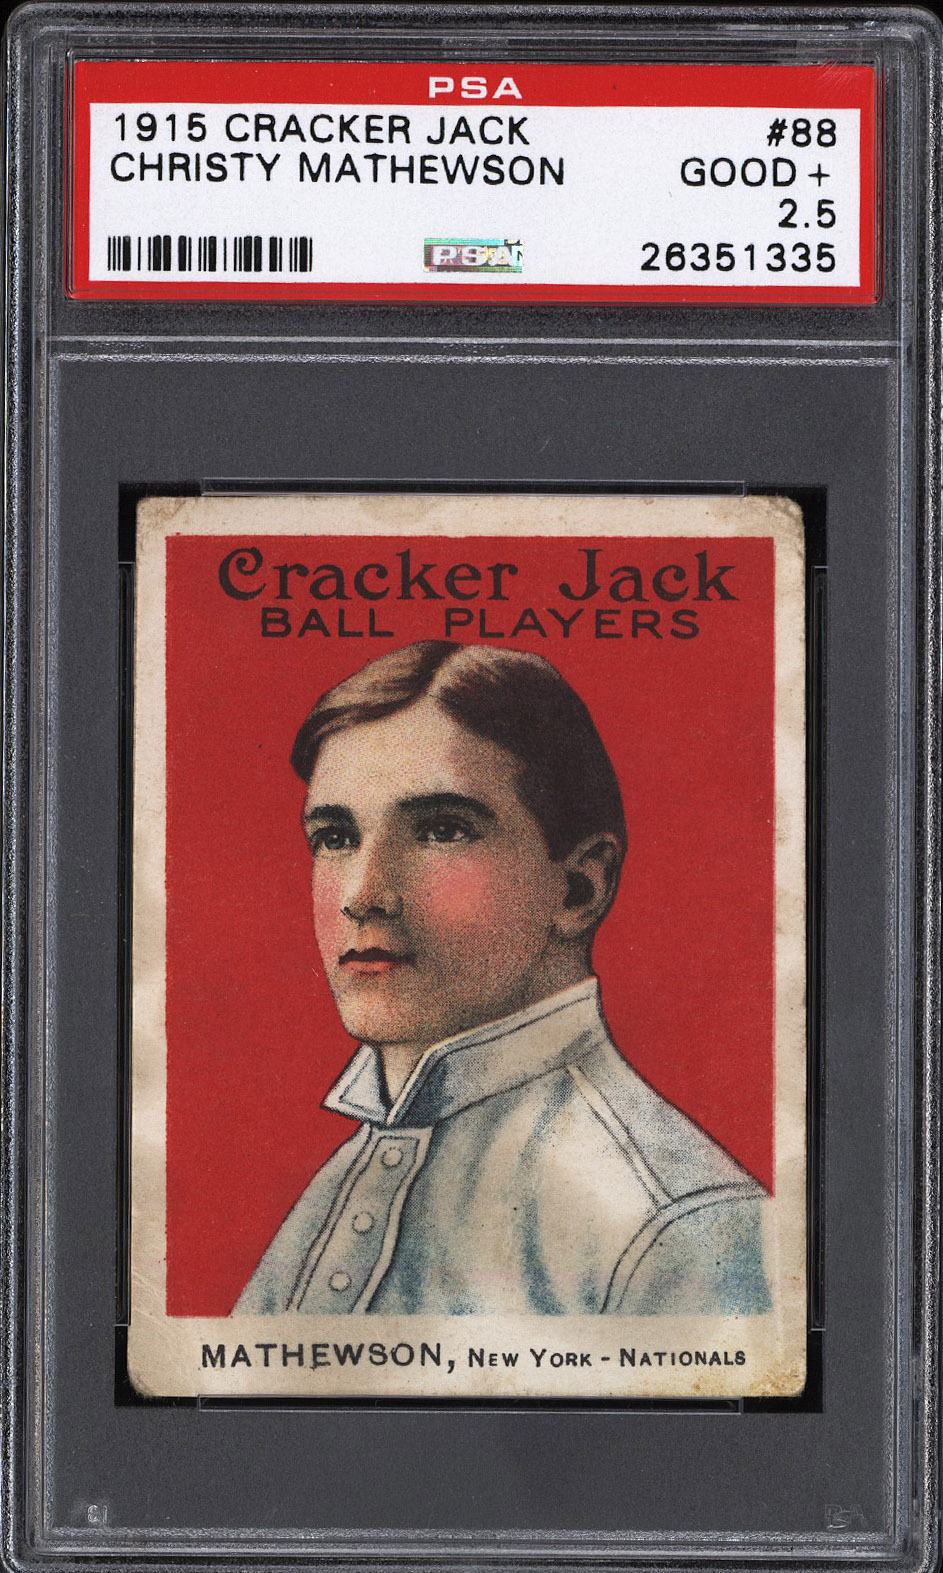  1915 Cracker Jack #88 Christy Mathewson (HOF) - PSA GOOD+ 2.5